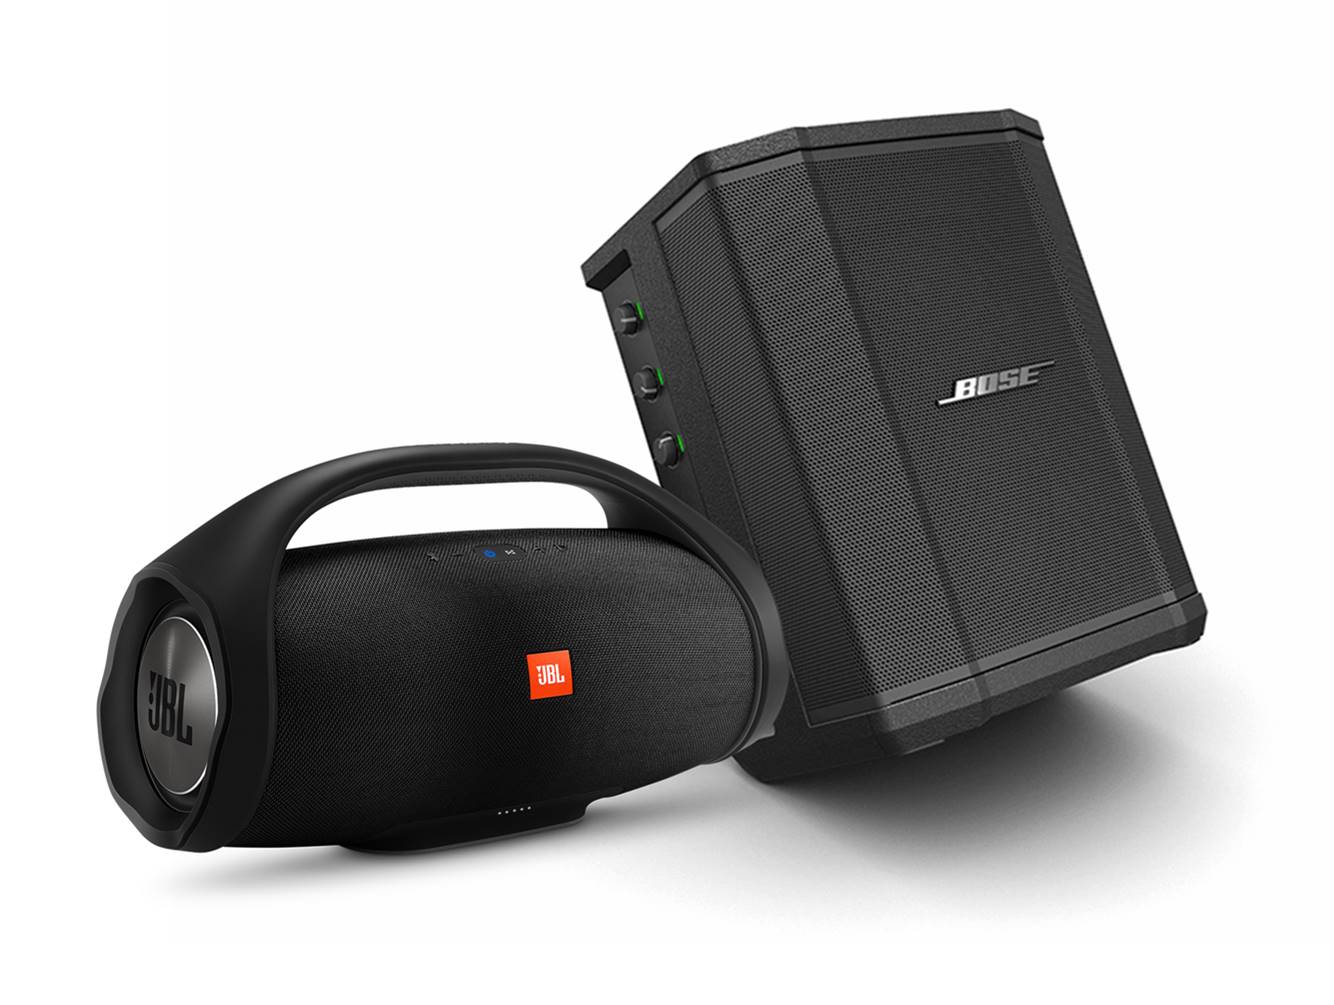 verlies uzelf straal emmer Bose S1 Pro vs JBL Boombox – Which is the better speaker?